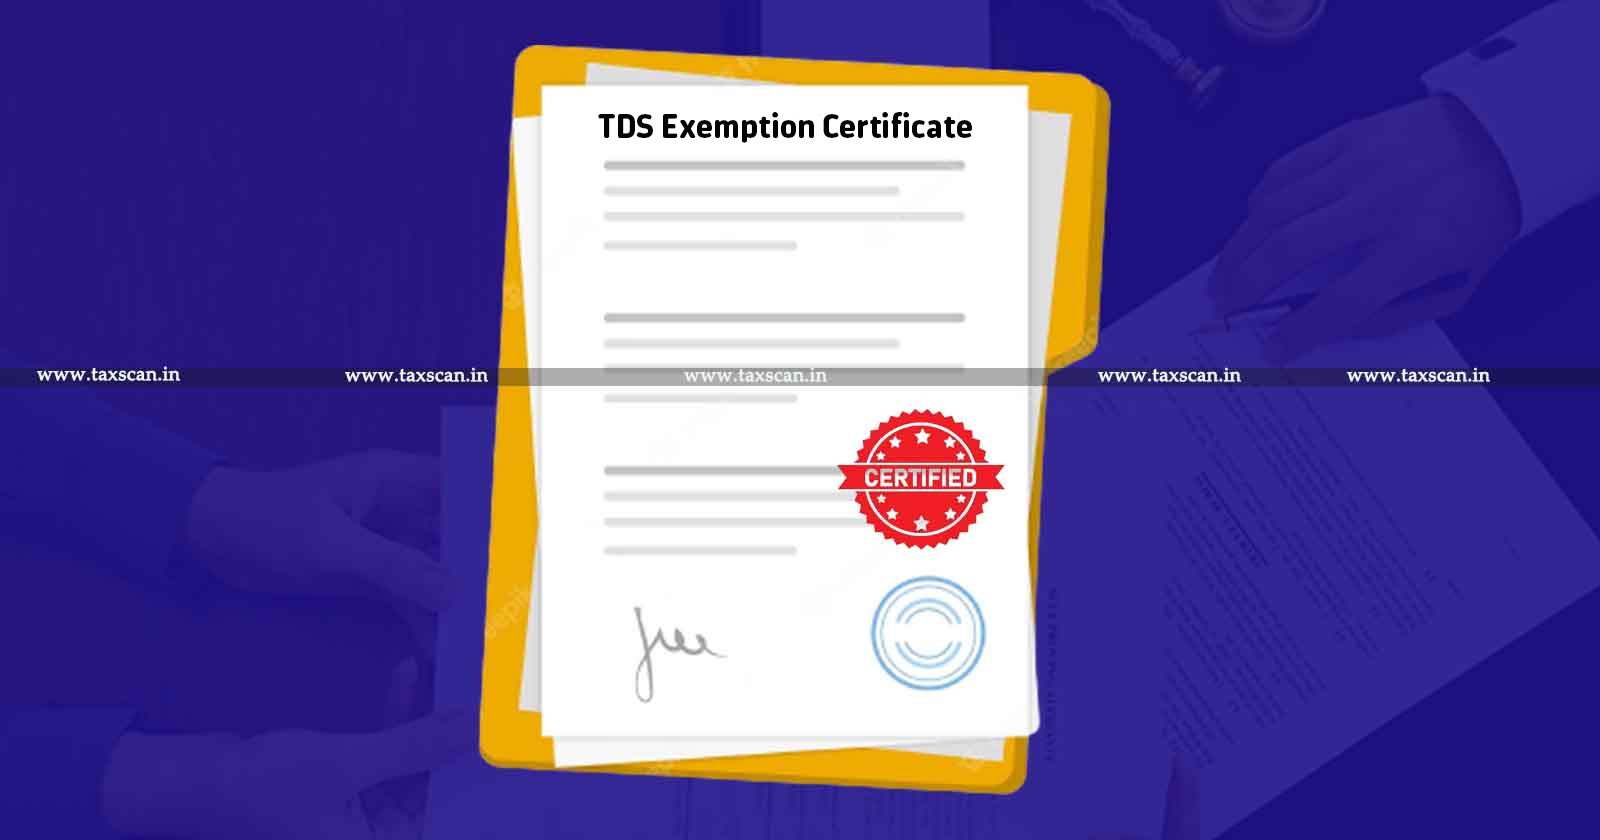 ITAT - ITAT Hyderabad - Income Tax - TDS Exemption - TAXSCAN